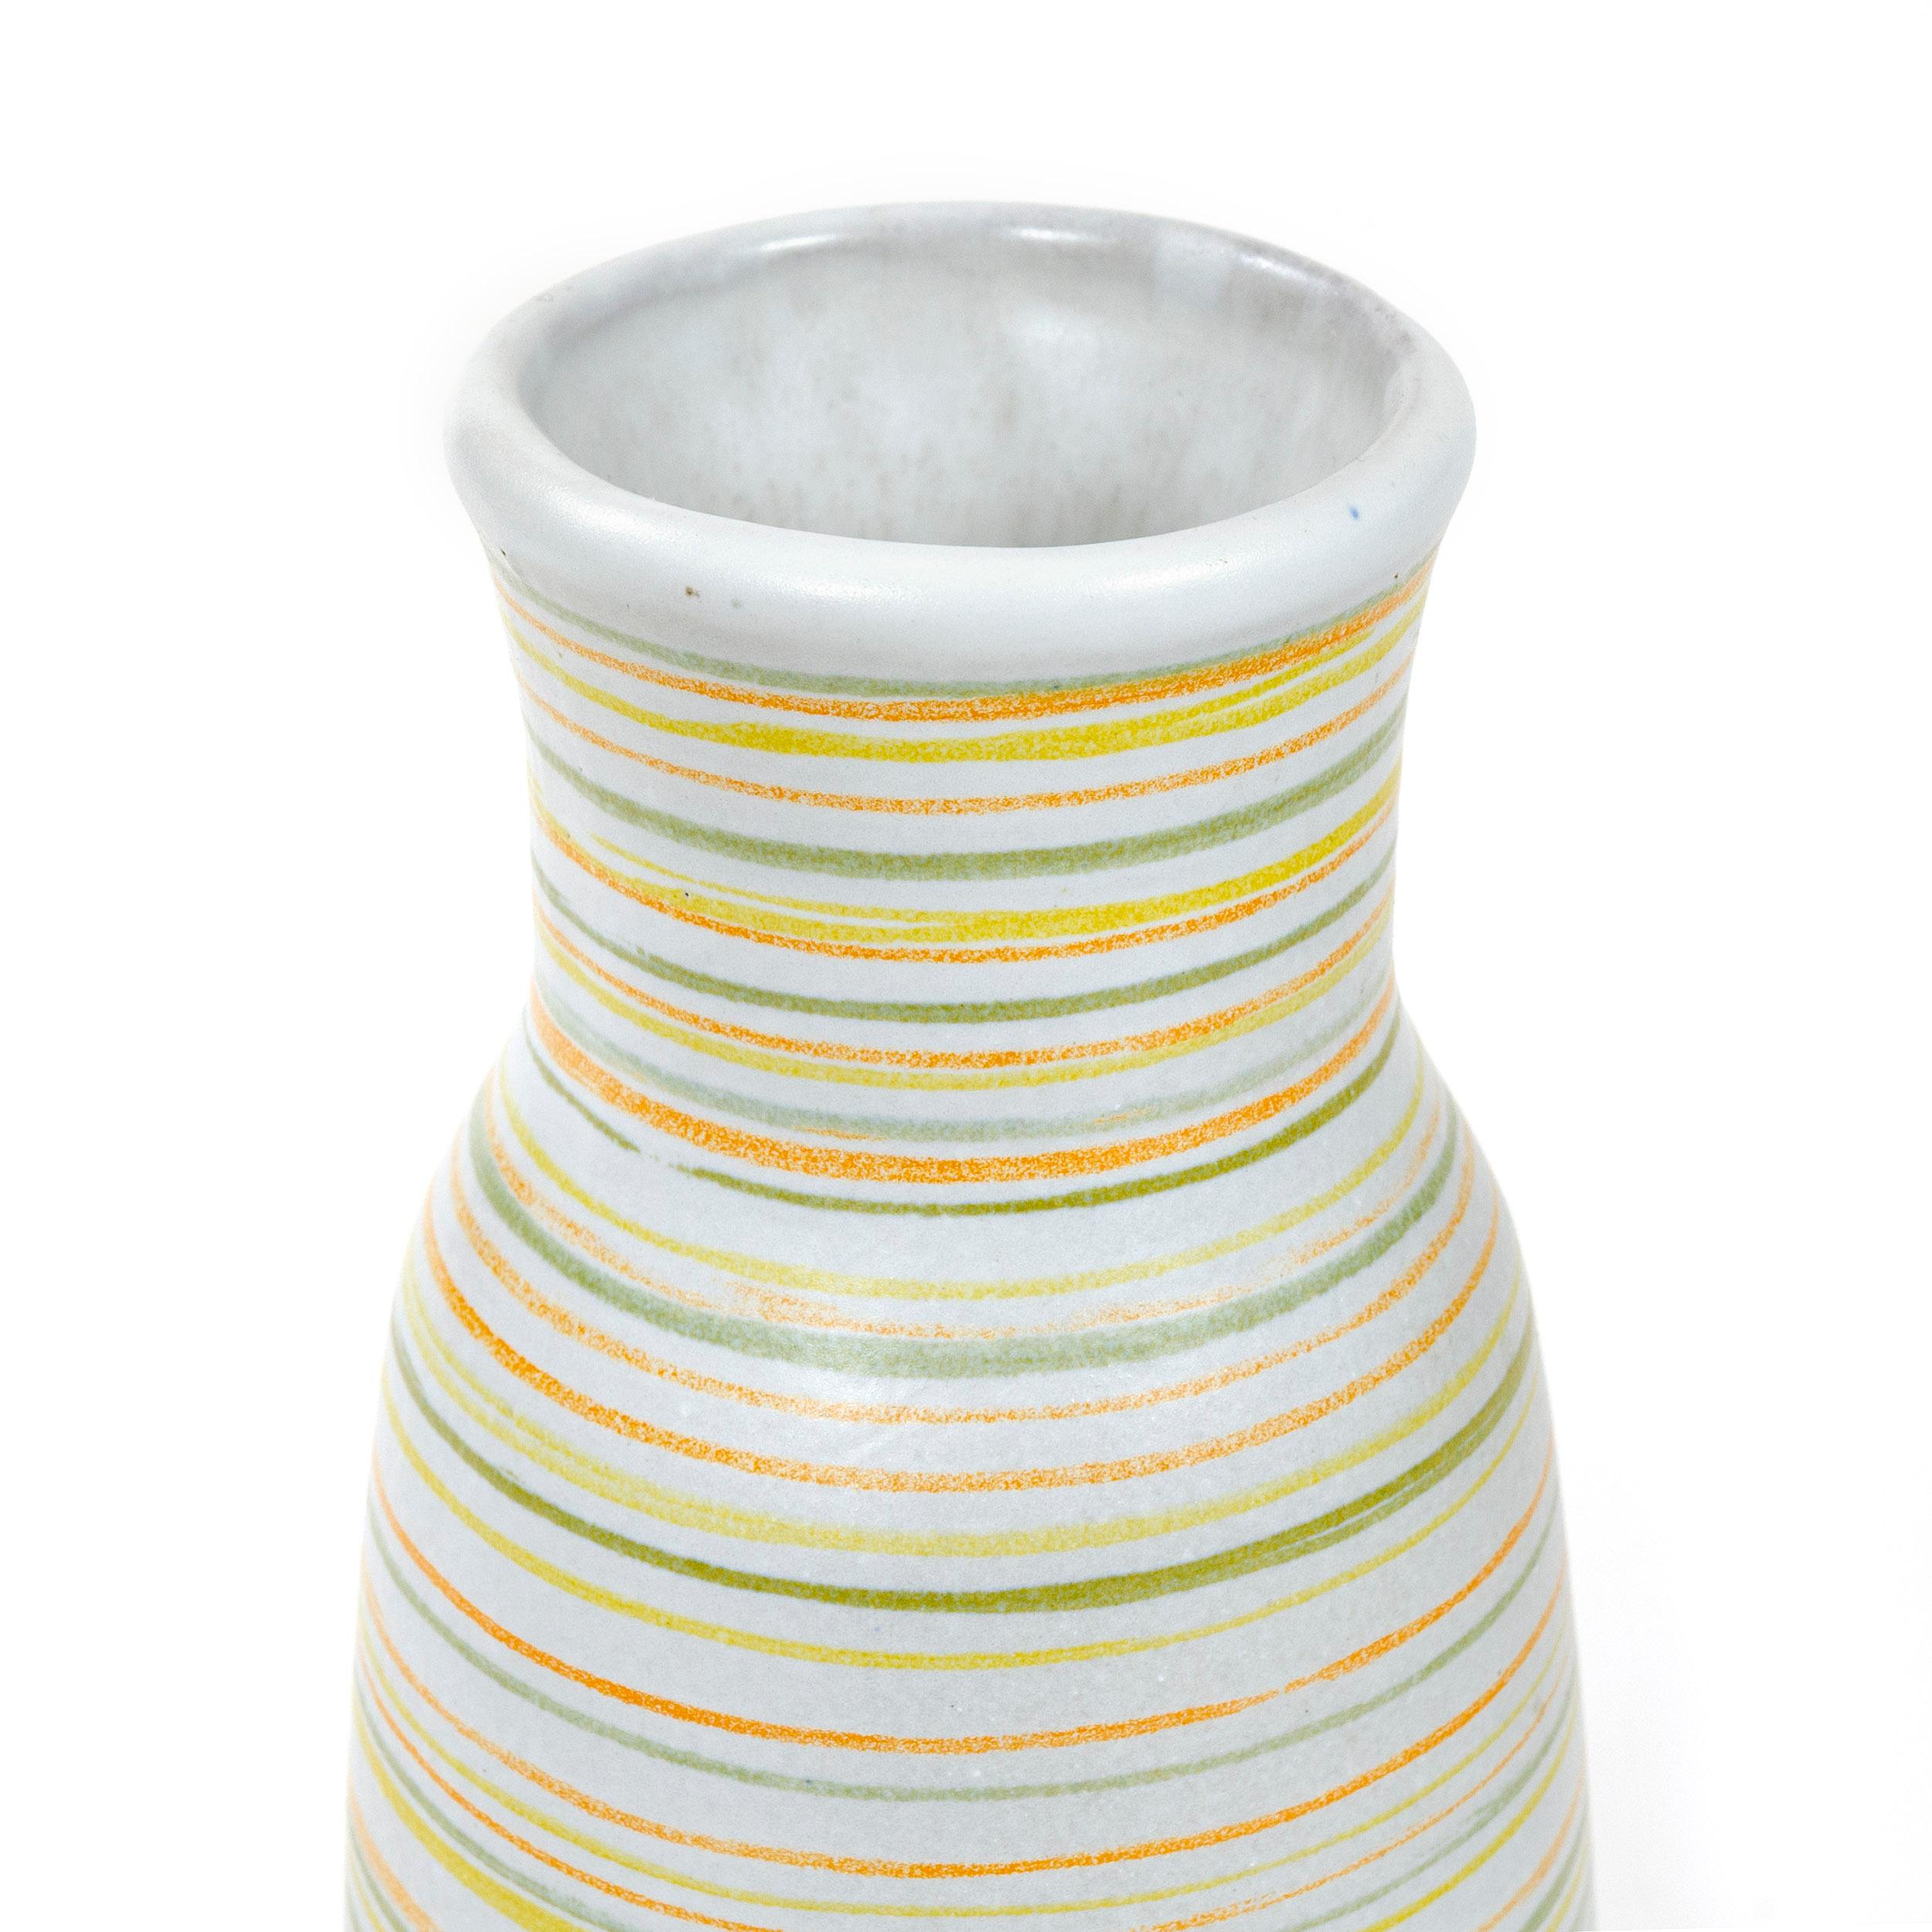 1960s Ceramic Vase by Lee Rosen for Design Technics In Good Condition For Sale In Sagaponack, NY